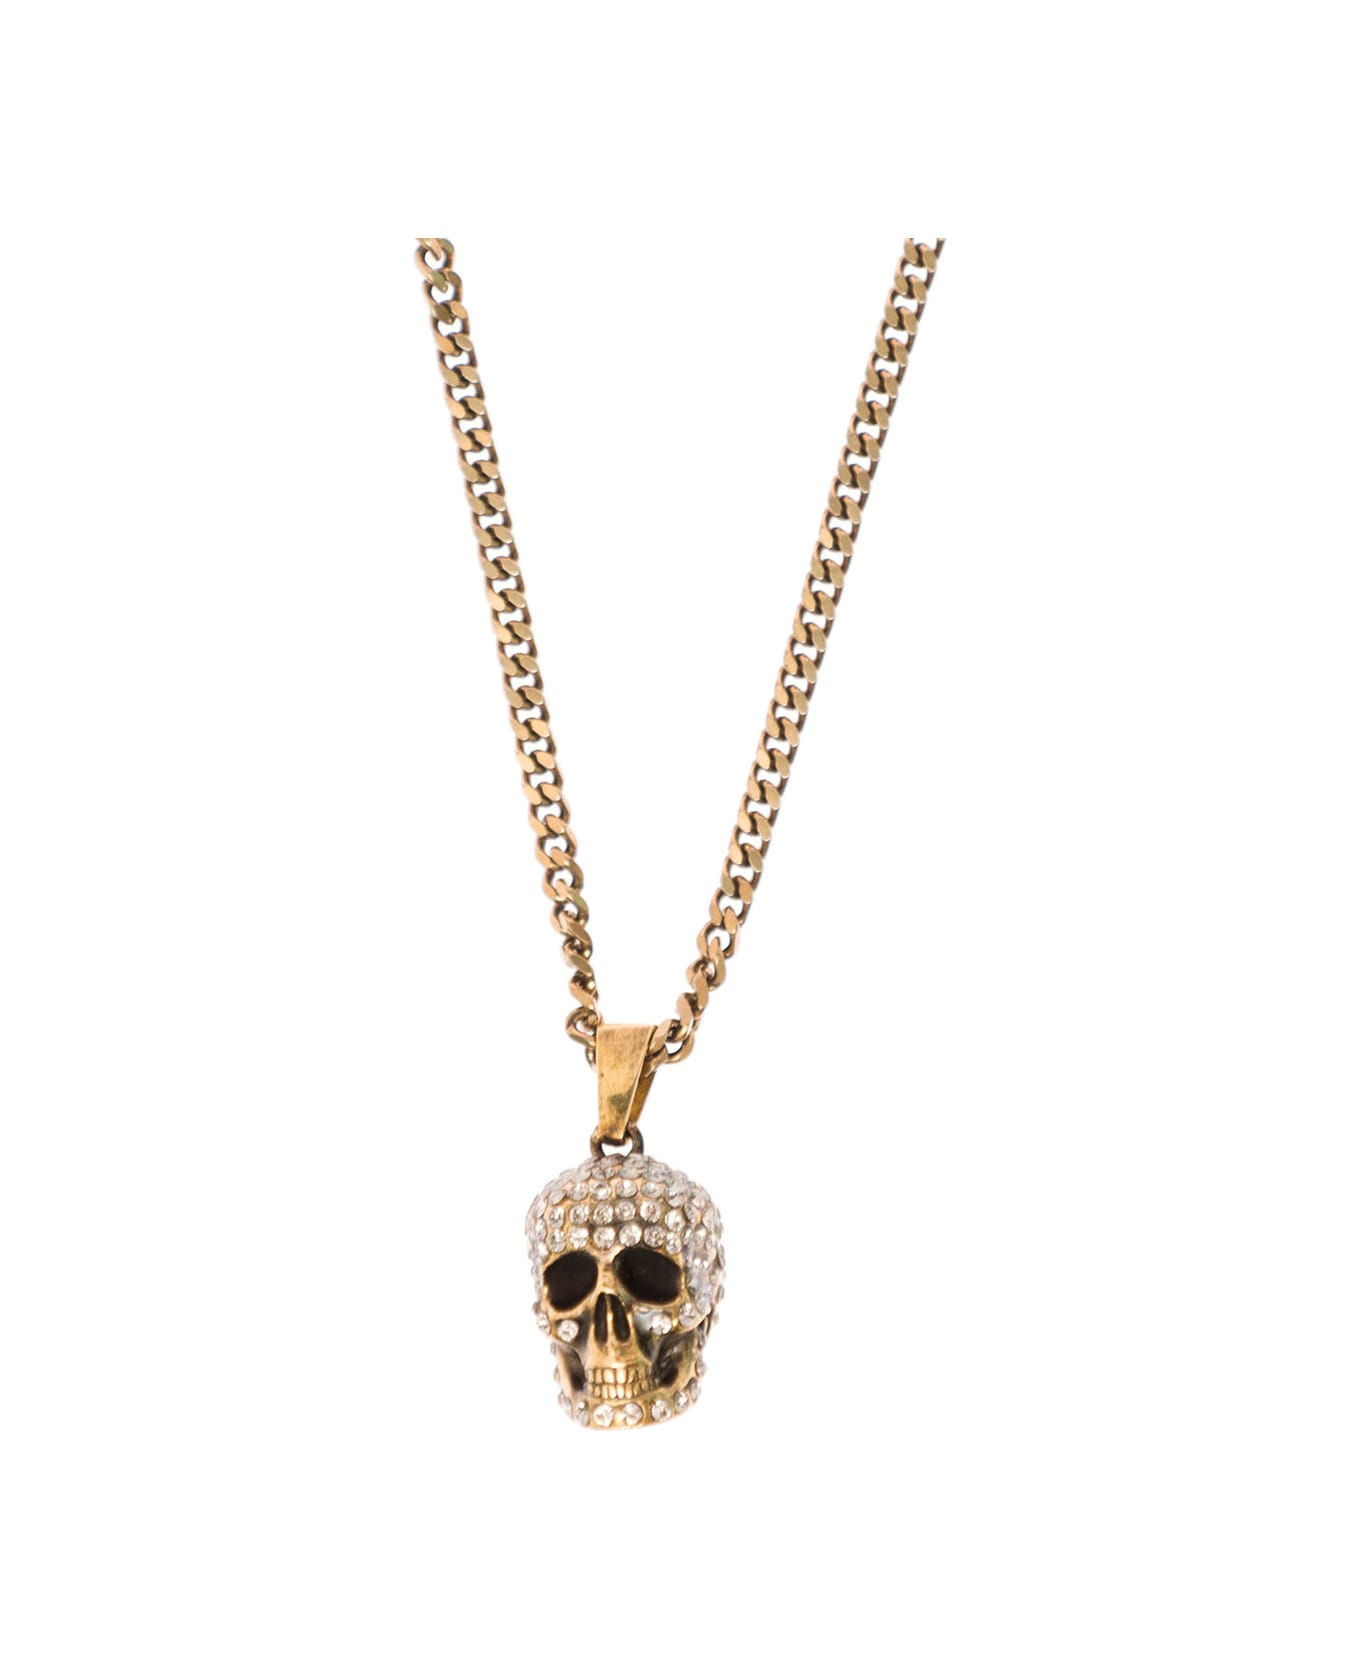 Alexander McQueen Woman's Pave Skull  Golden Brass Necklace With Skull Pendant Detail - Metallic